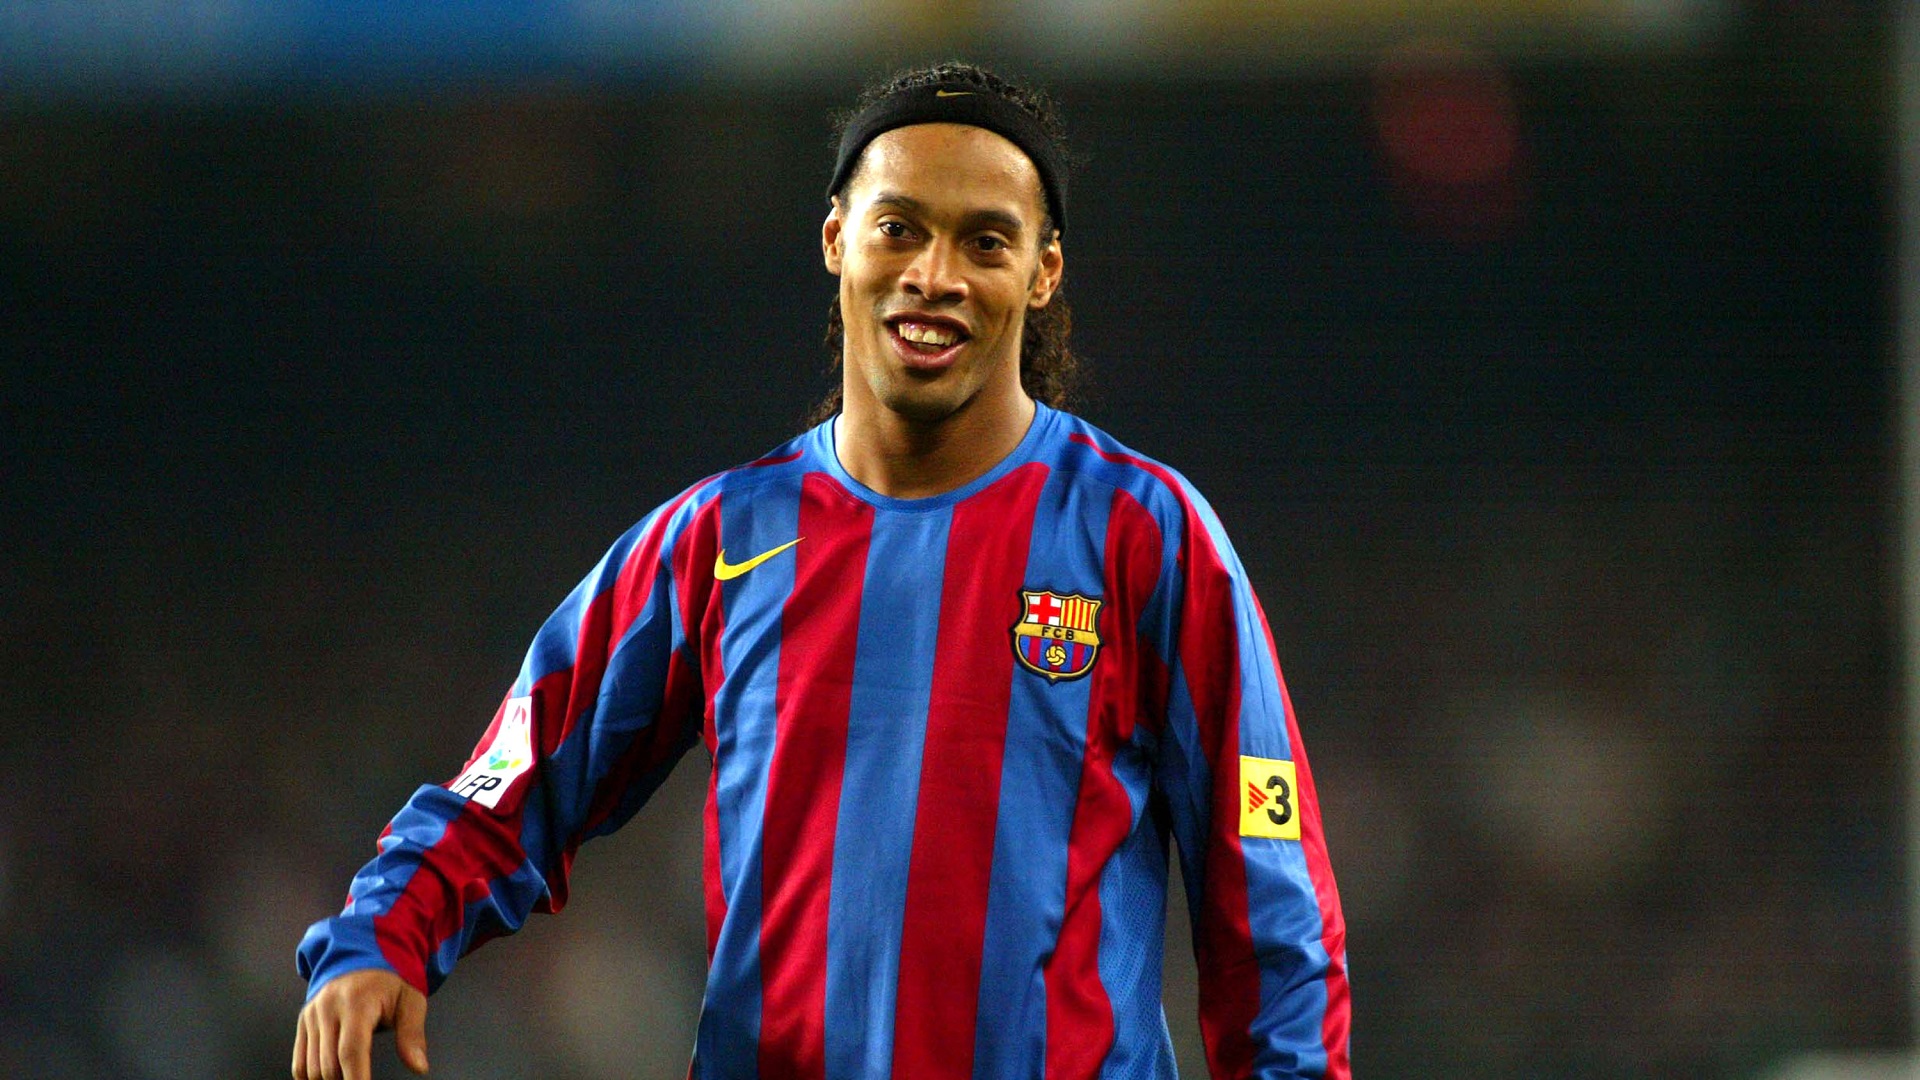 ‘I was offered 500,000 pesetas to take out Ronaldinho’ – Caceres